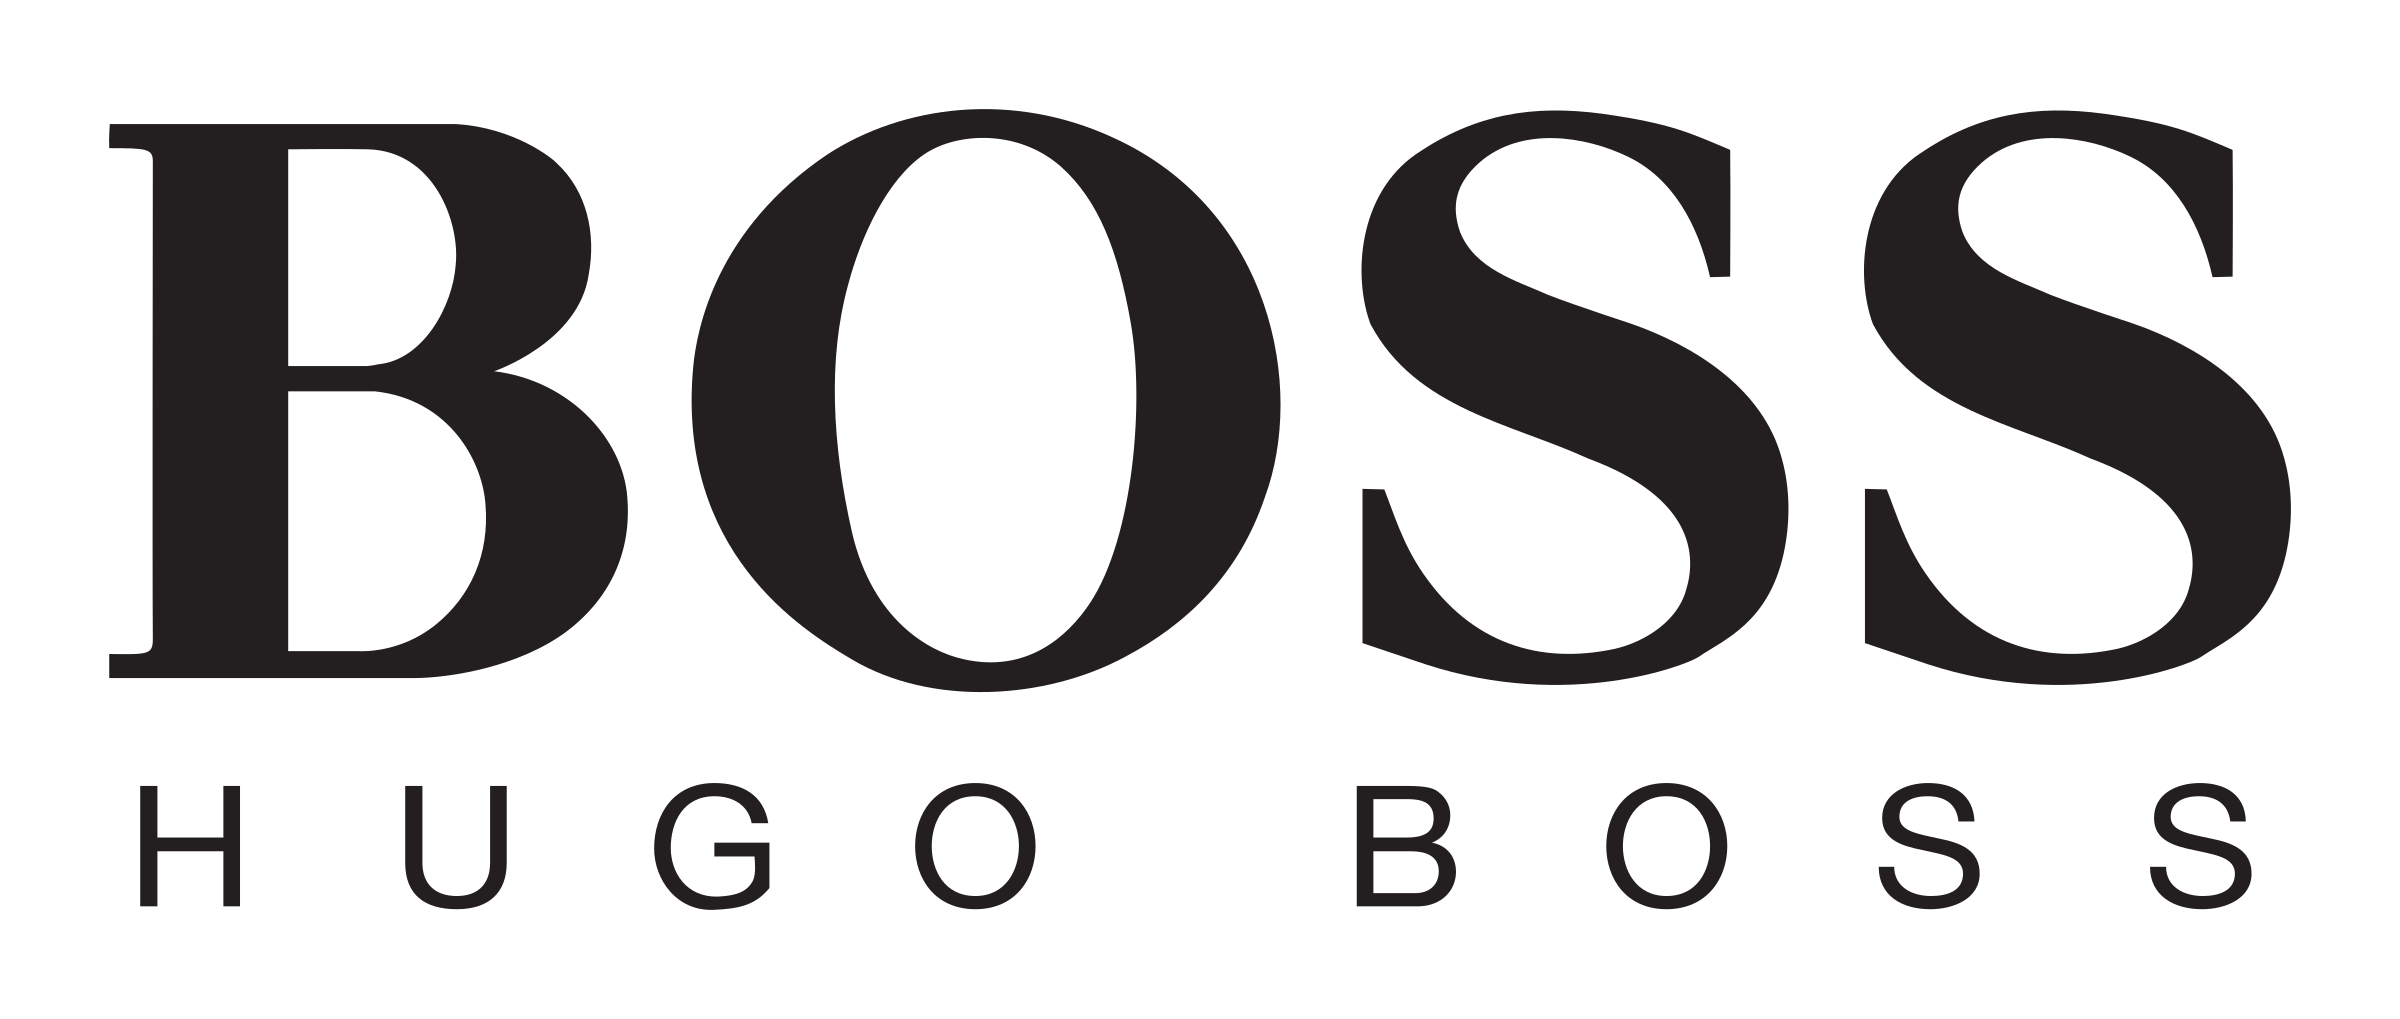 Hugo Boss Logo Png Transparent - Boss Black And White, Transparent background PNG HD thumbnail